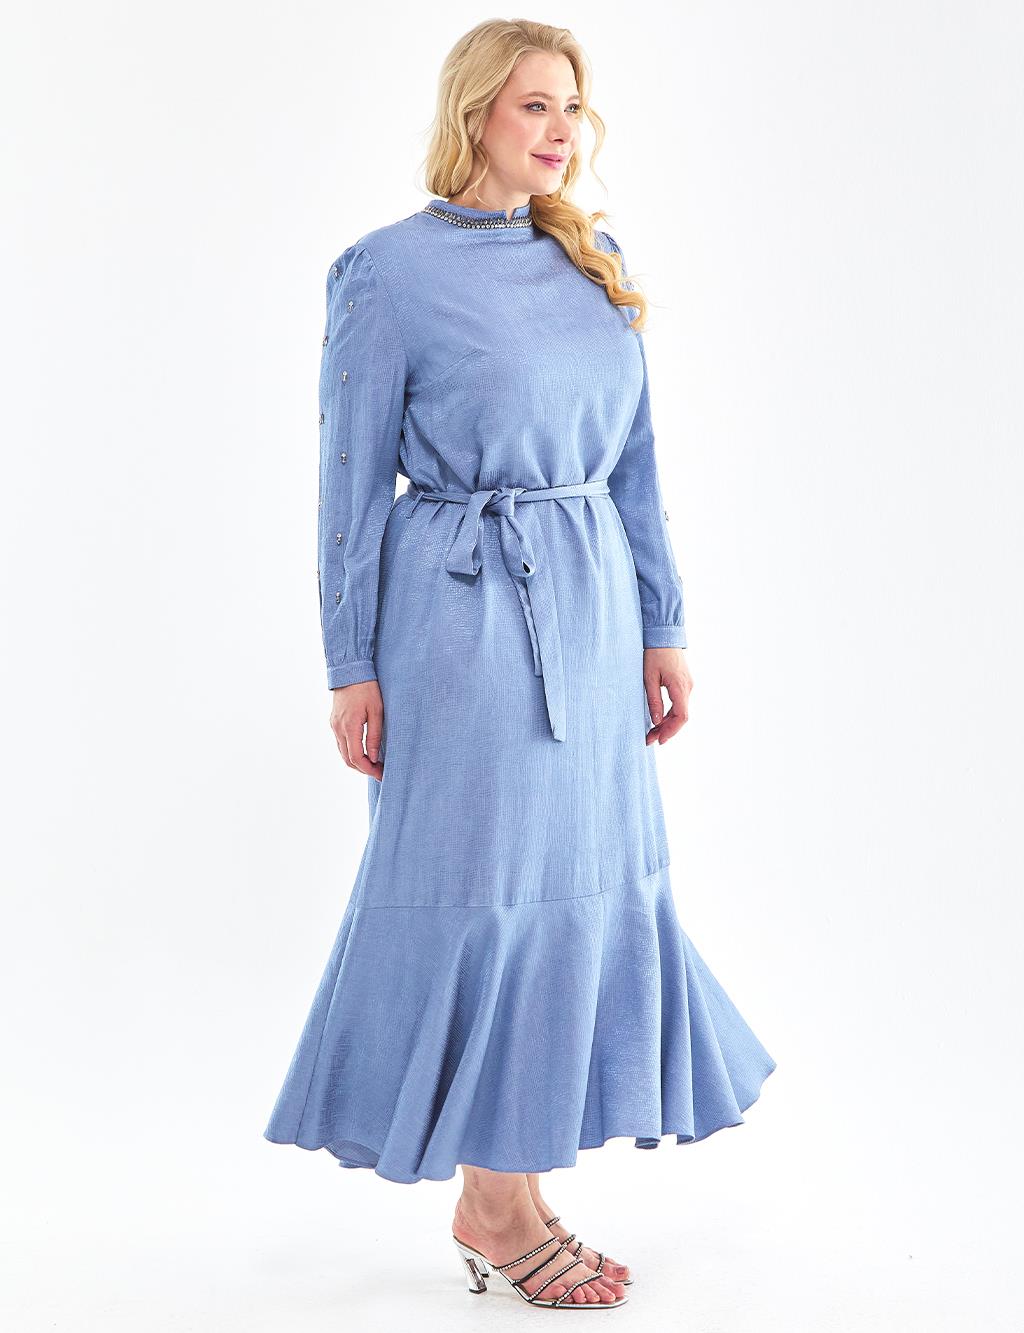 Belted Embroidered Dress Sky Blue